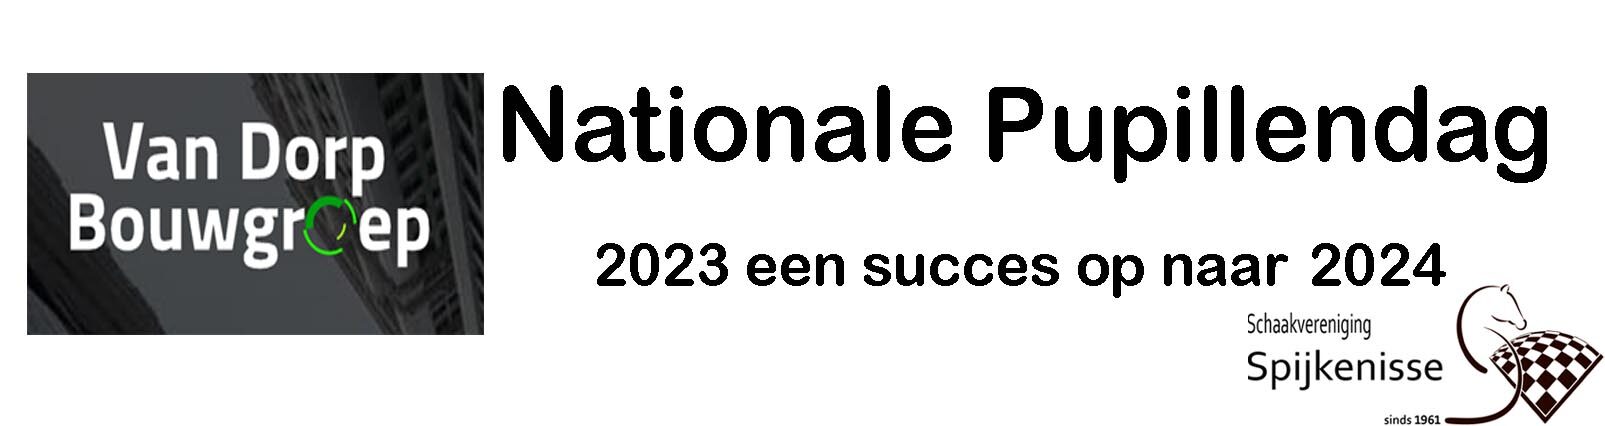 Nationale Pupillendag 2024 logo